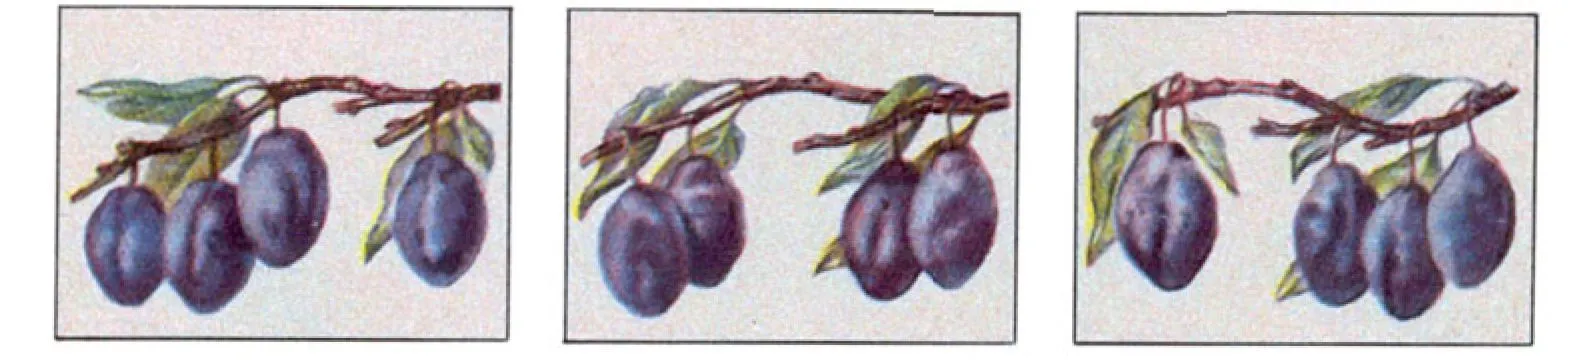 4 plums